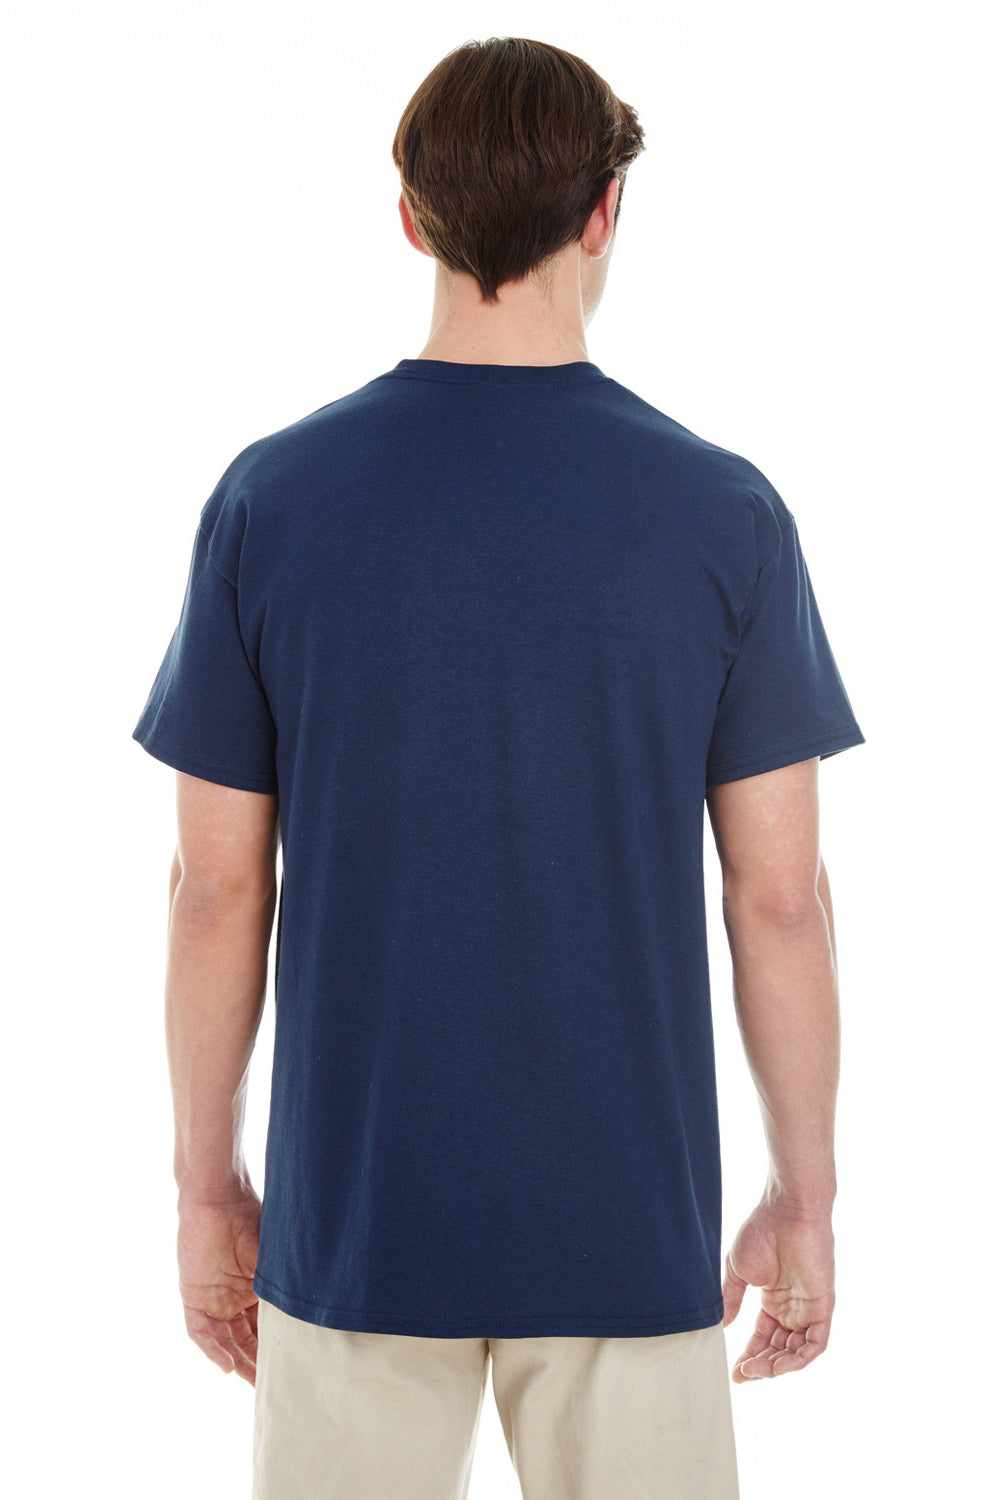 Gildan G530 Mens Short Sleeve Crewneck T-Shirt w/ Pocket Navy Blue Back